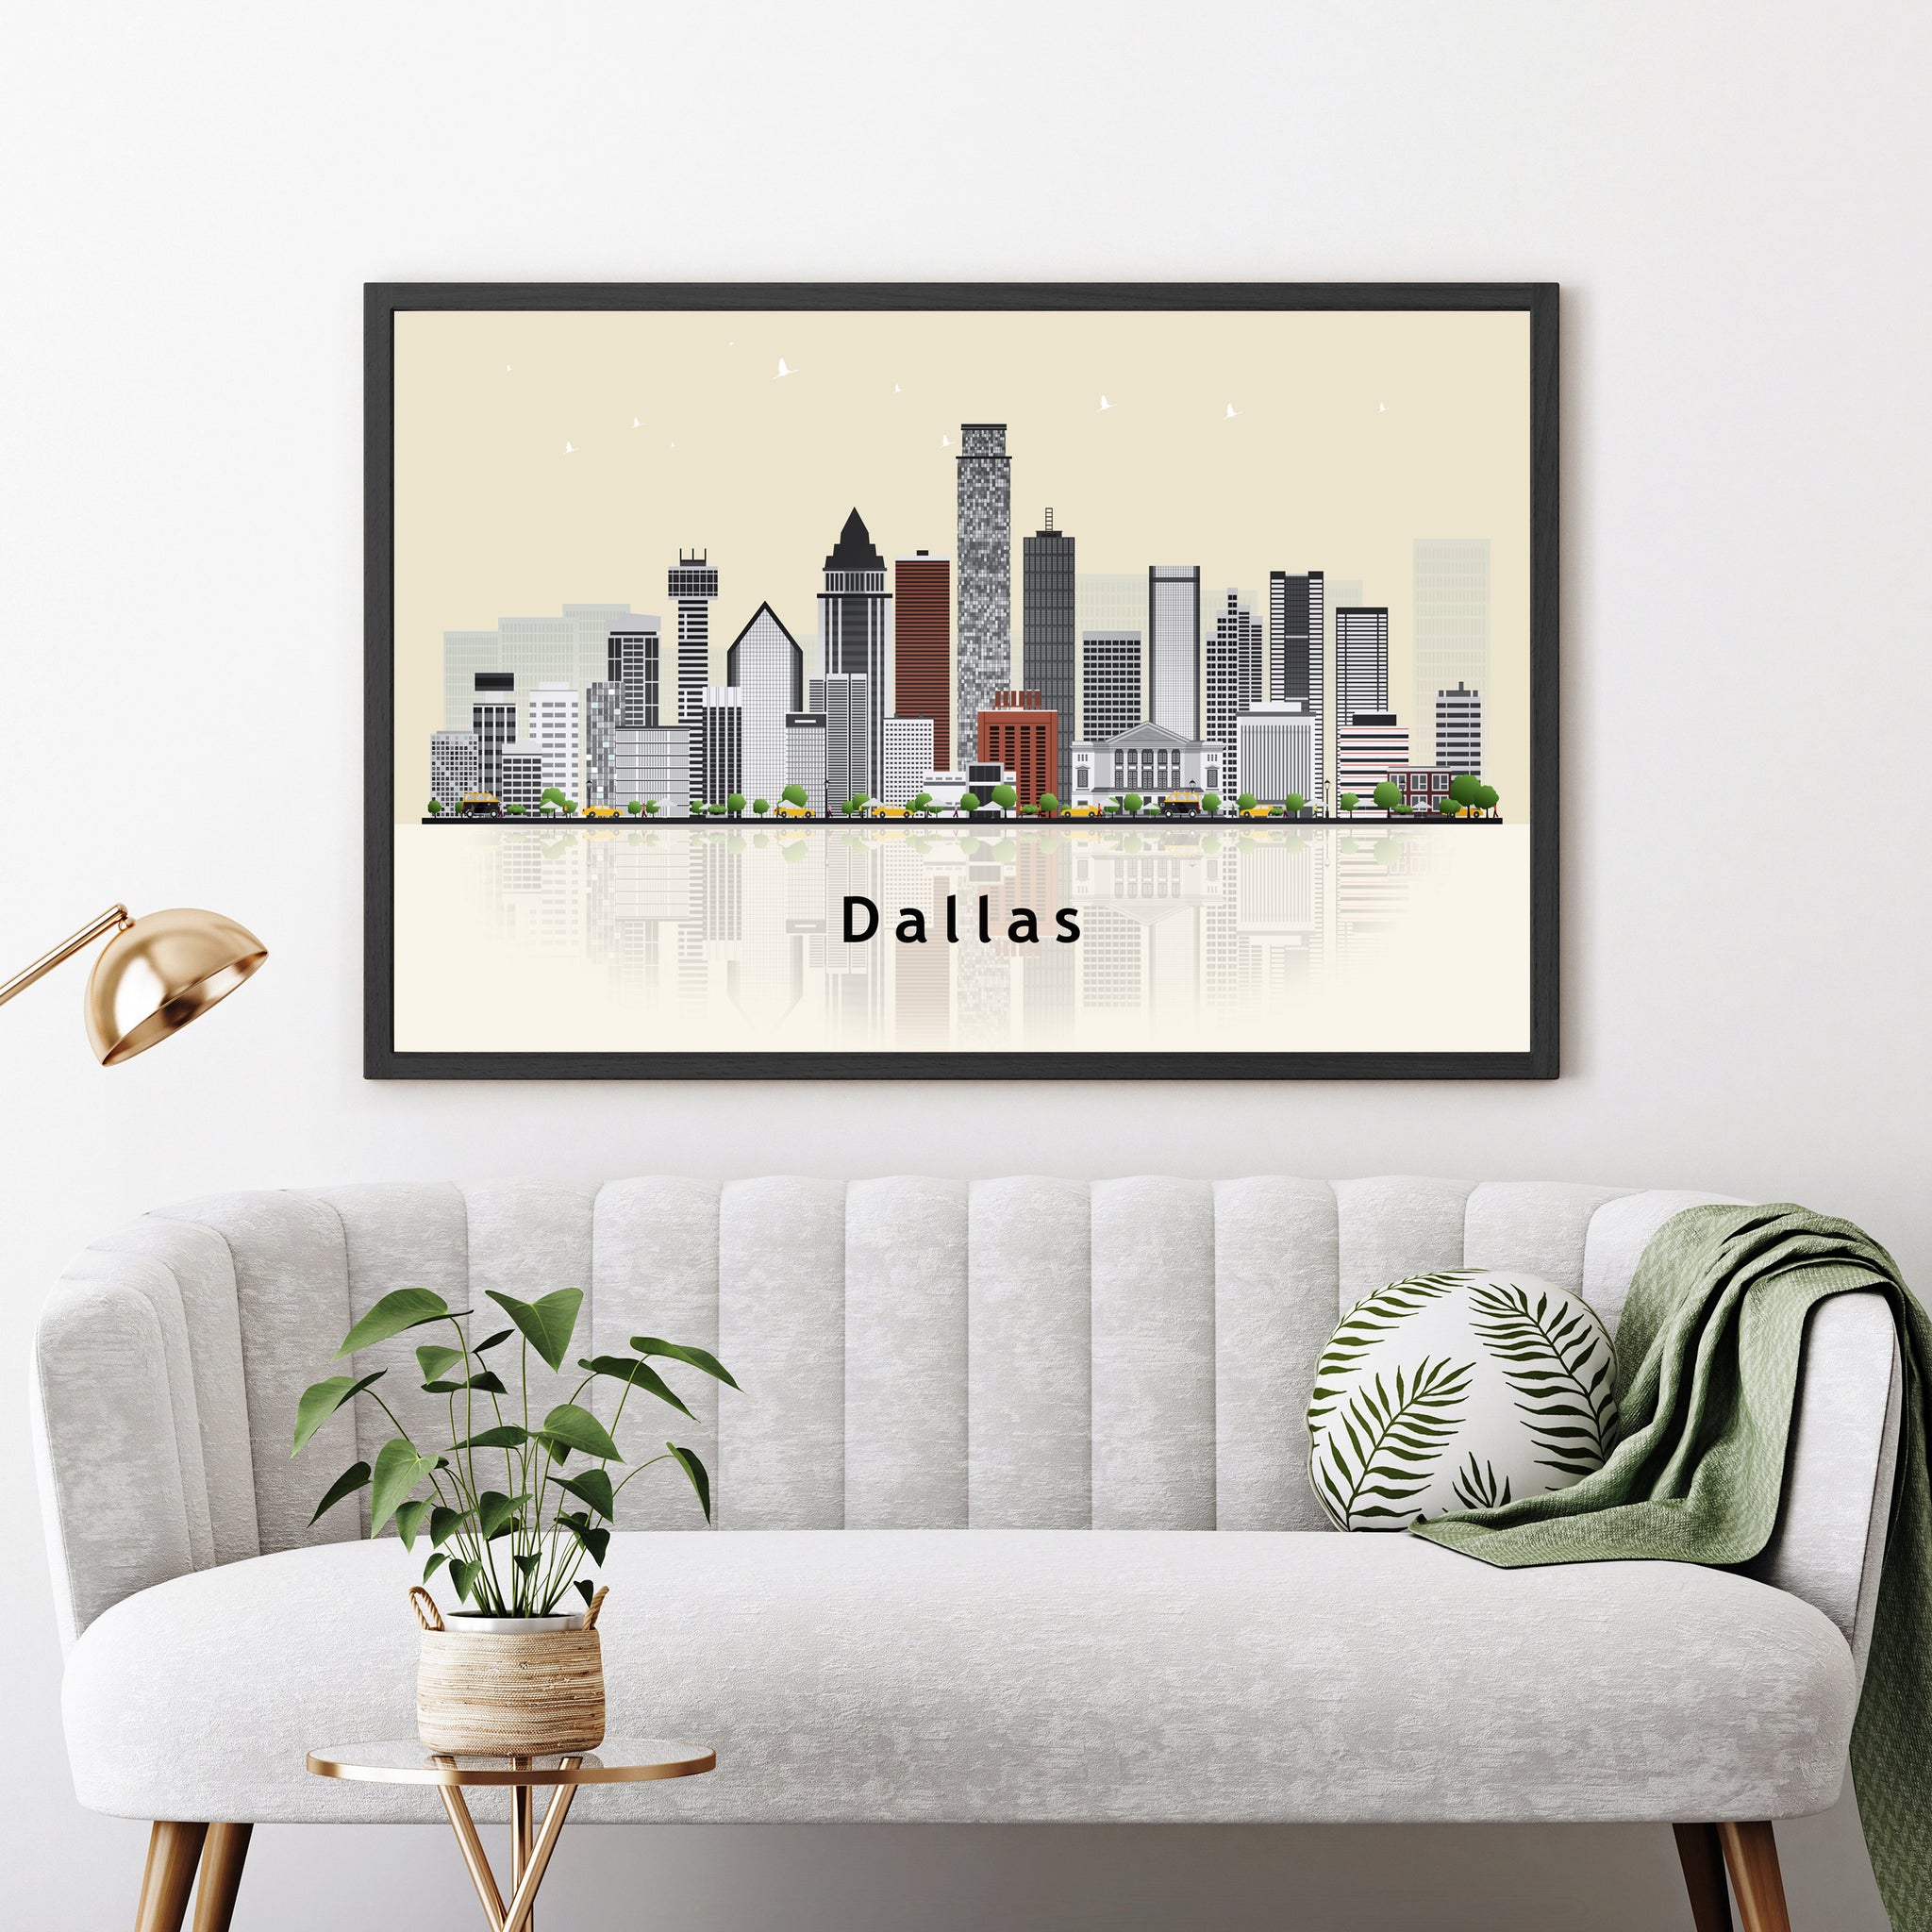 DALLAS TEXAS Illustration skyline poster, Texas state modern skyline cityscape poster, Landmark art print, Home decoration